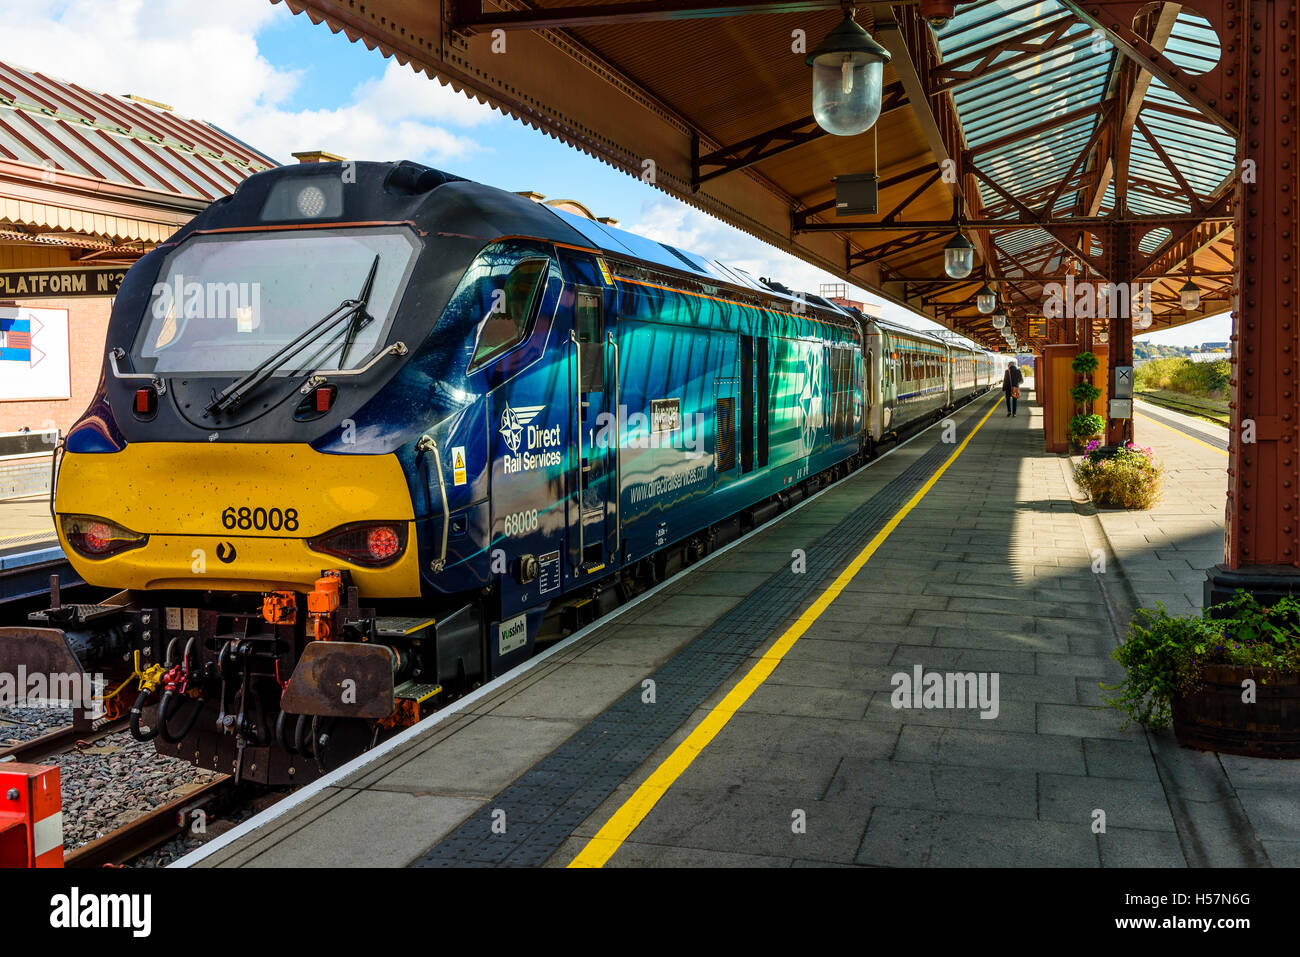 Locomotiva Diesel Avenger e Chiltern Railways treno a Birmingham Moor Street Station Foto Stock